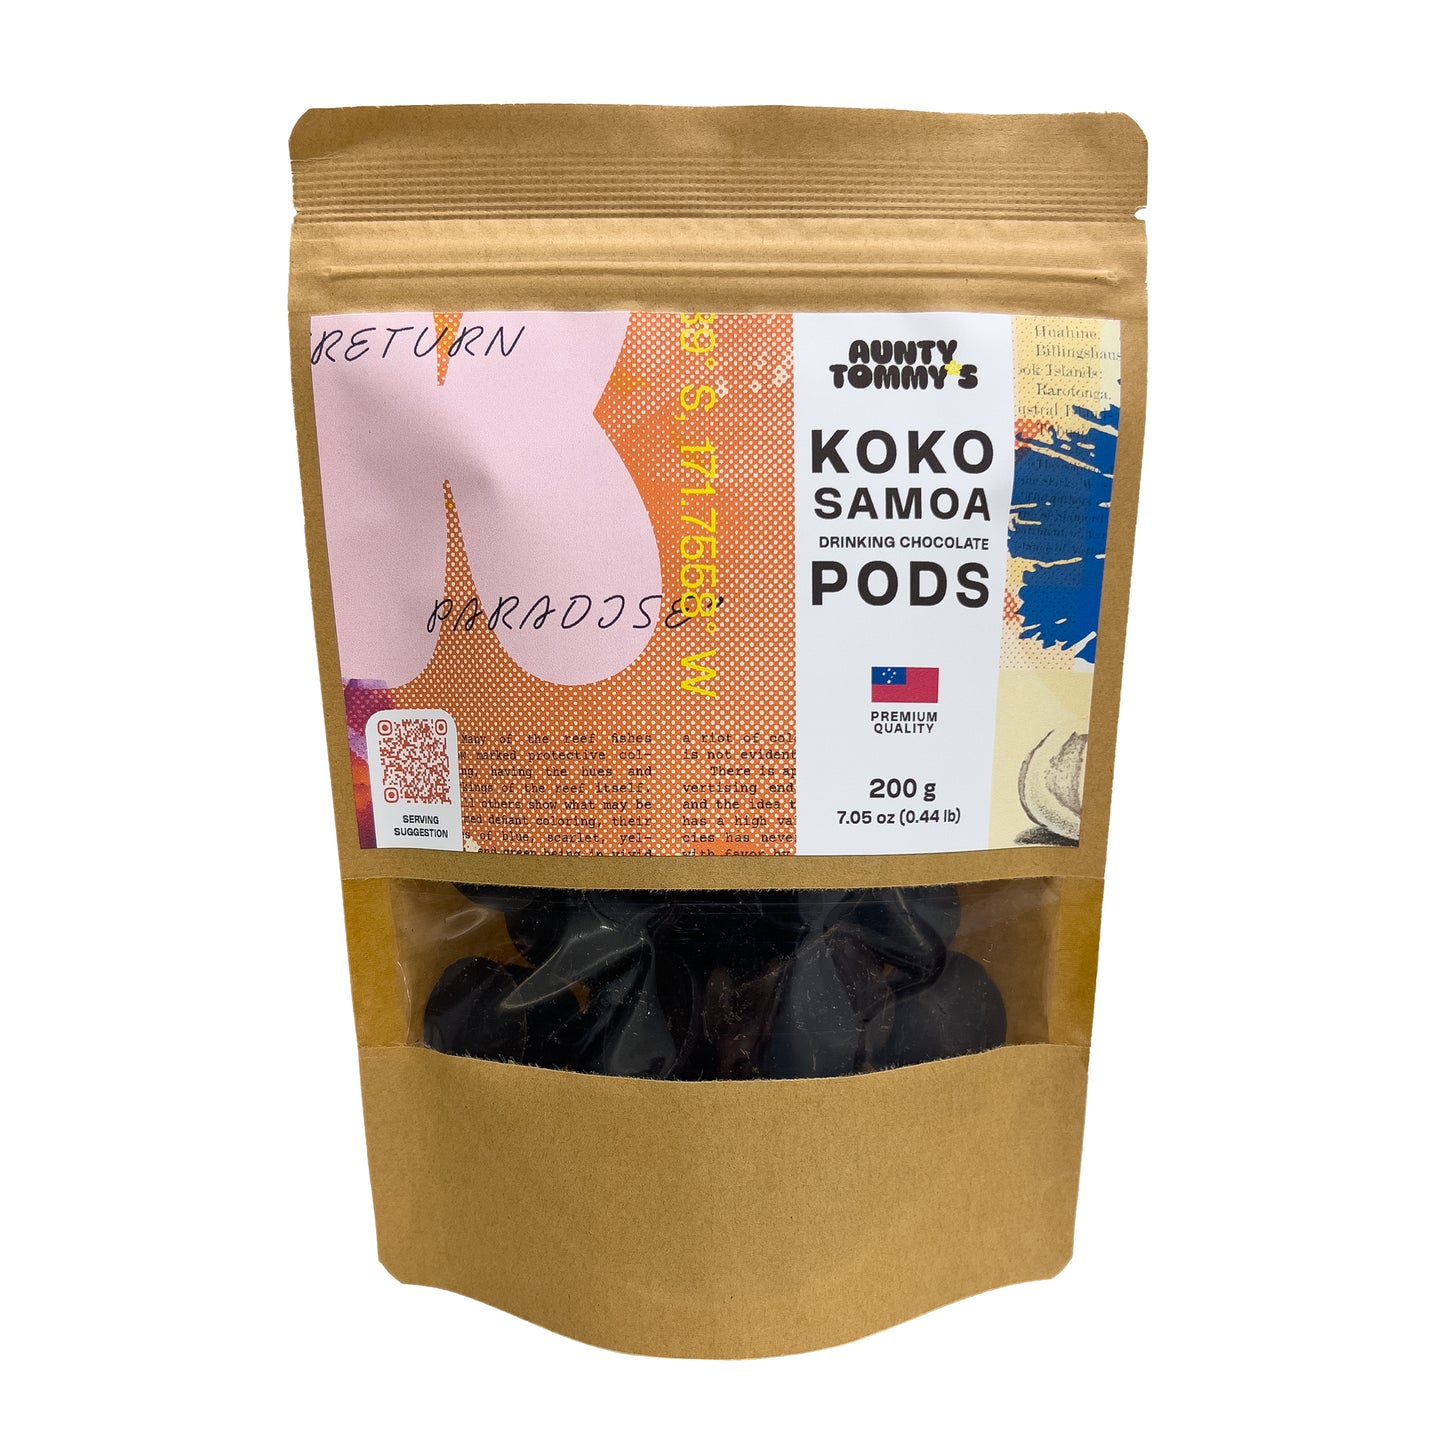 Koko Samoa Block and Pod Bundle Drinking Chocolate Pods